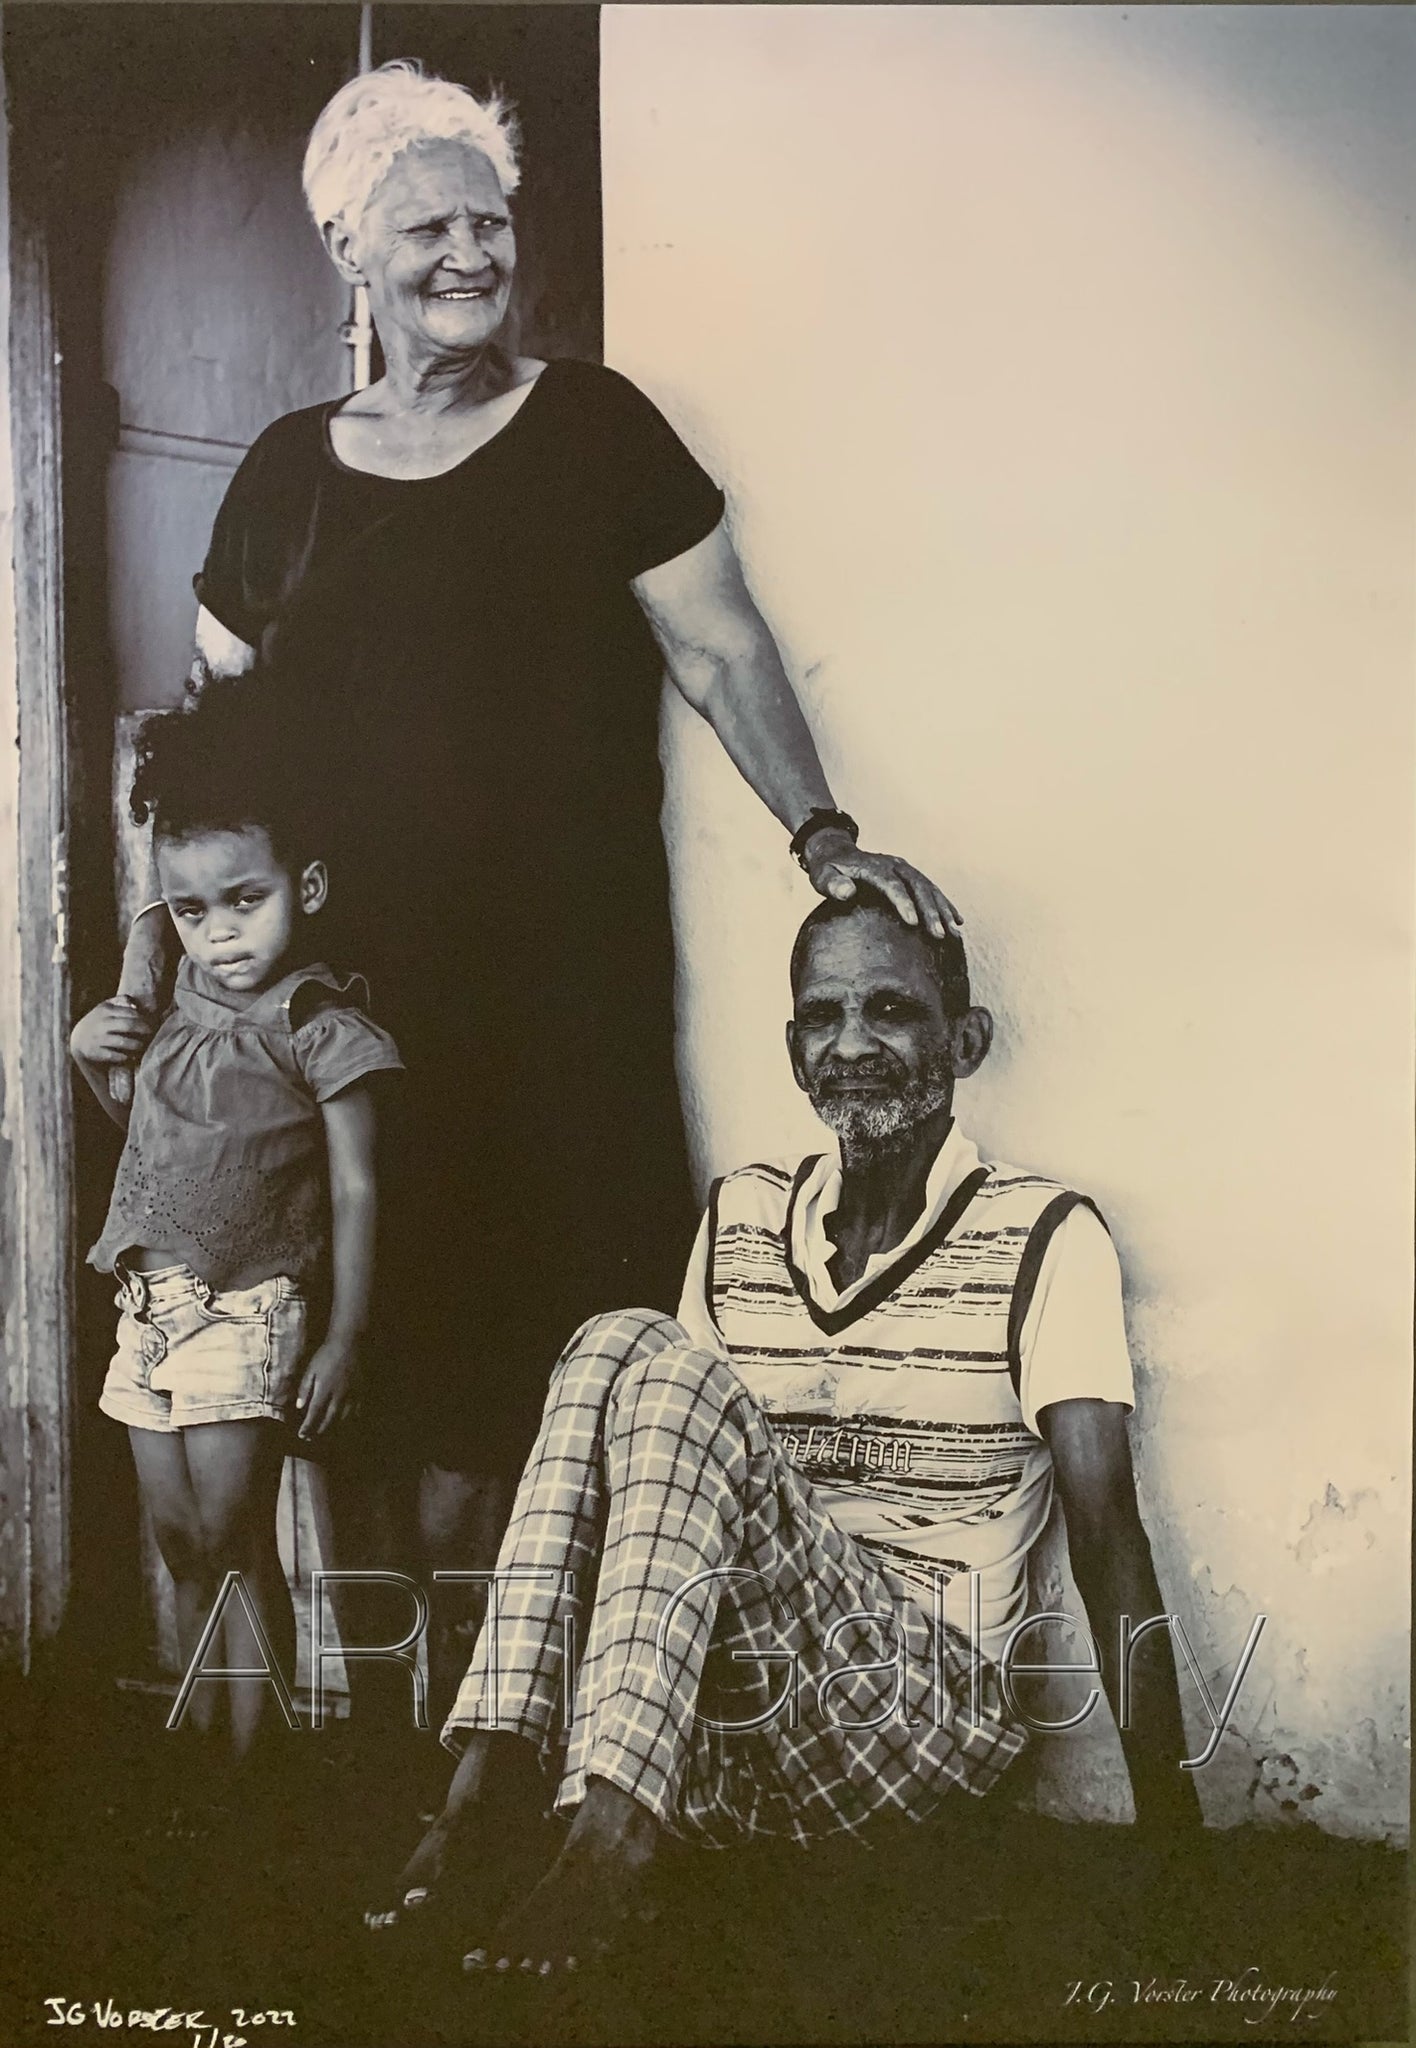 Photographic Print: Jan Vorster - The Pretorius Family